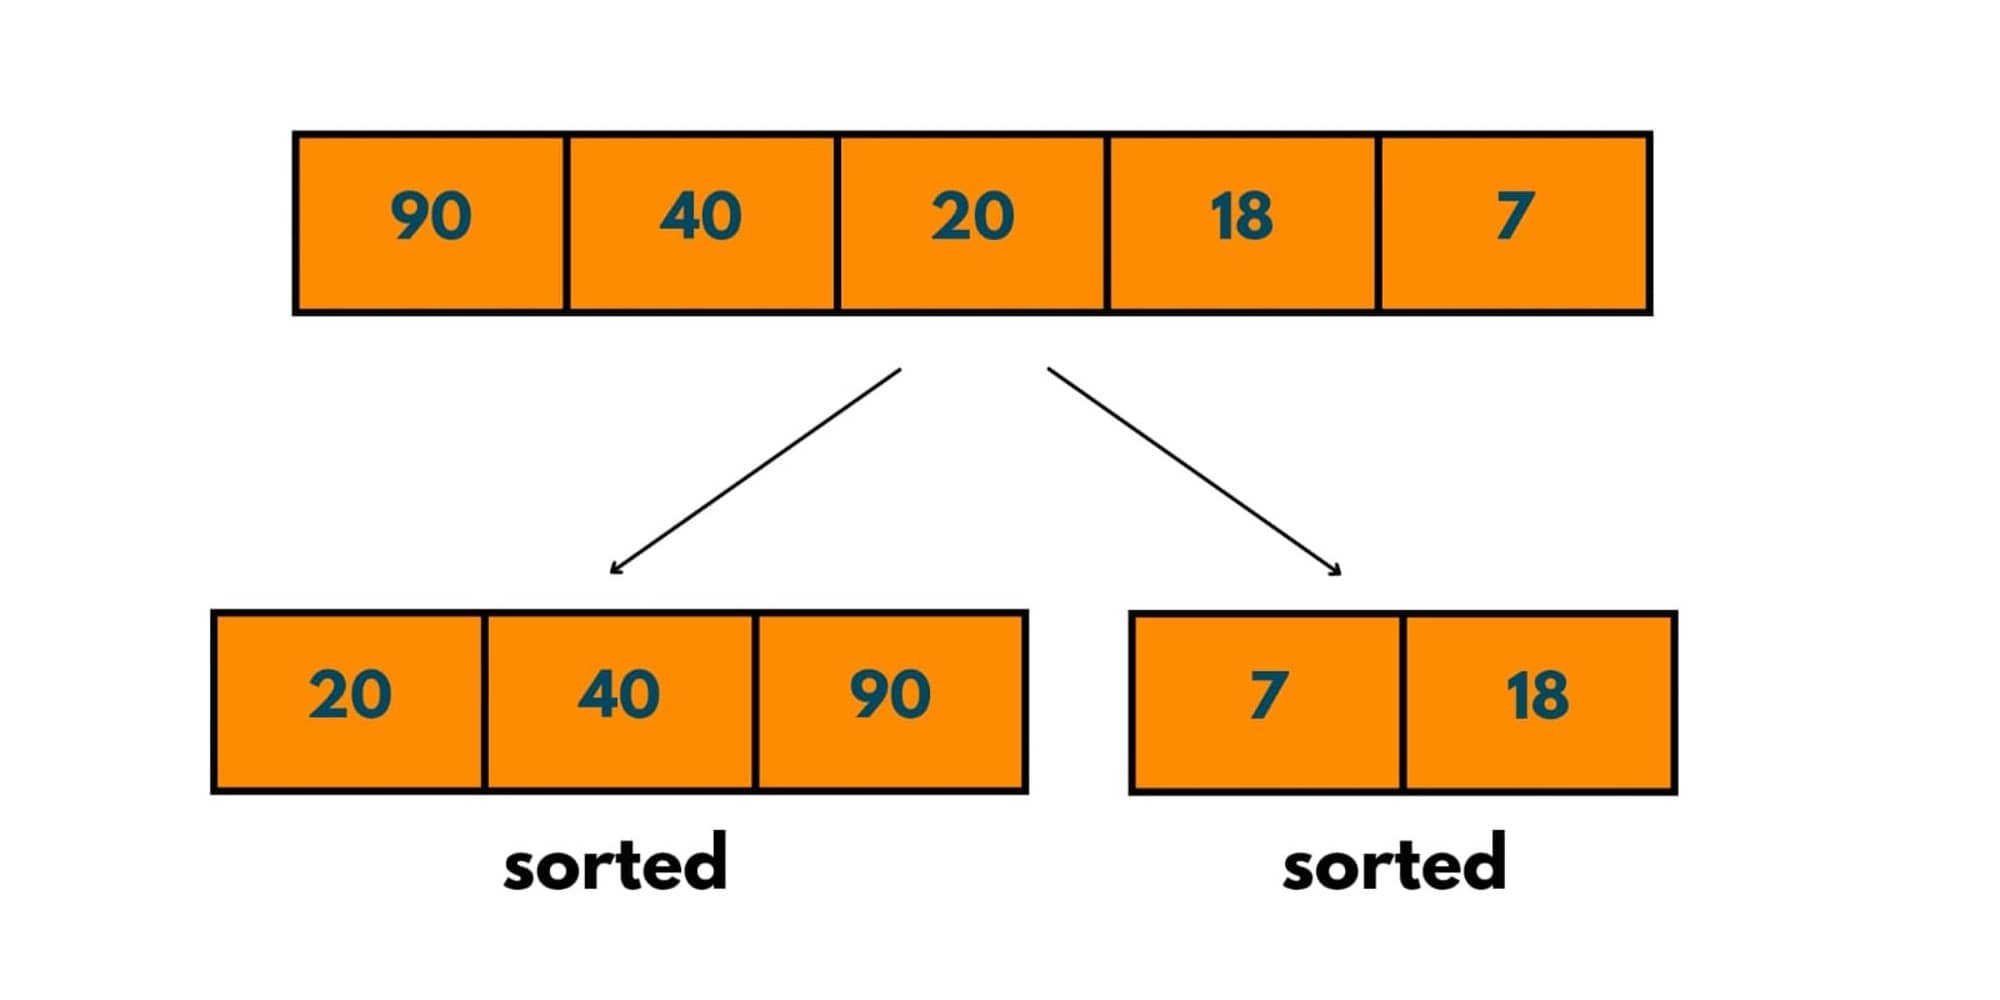 merge sort example 6